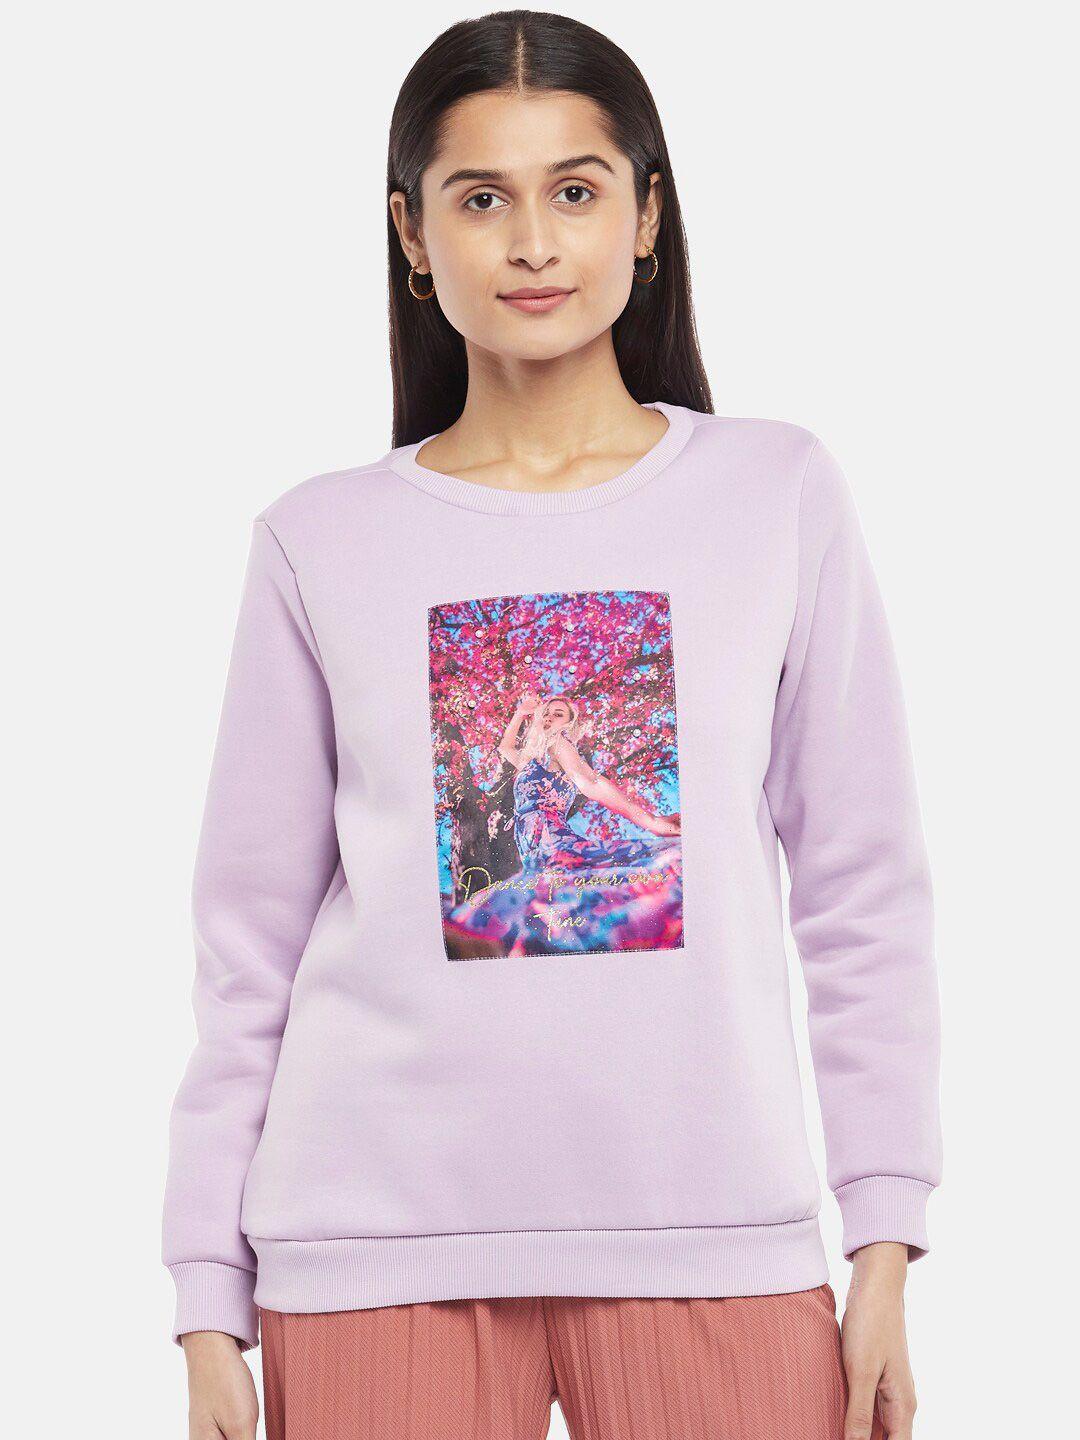 honey by pantaloons women purple printed sweatshirt